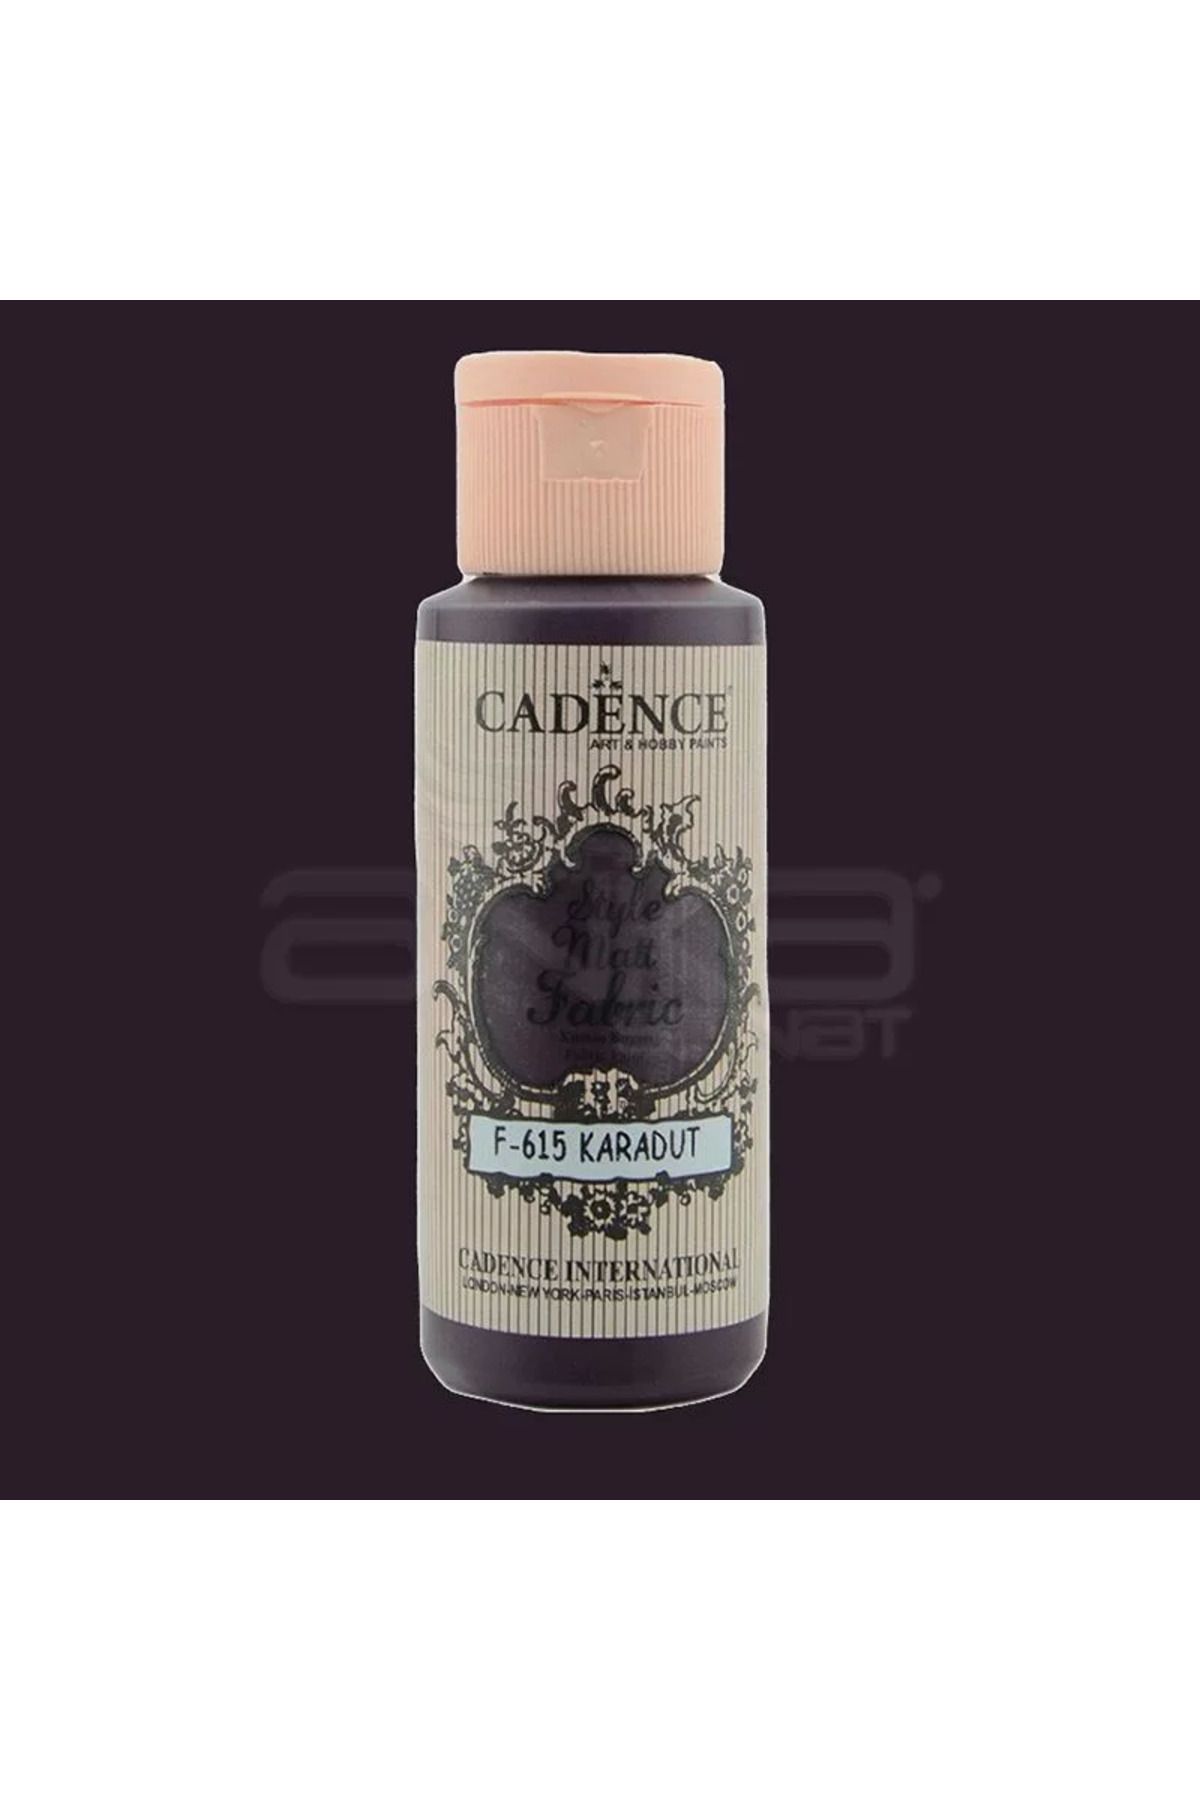 Cadence Style Matt Fabric Kumaş Boyası 59ml F615 Karadut-Mulberry Purple